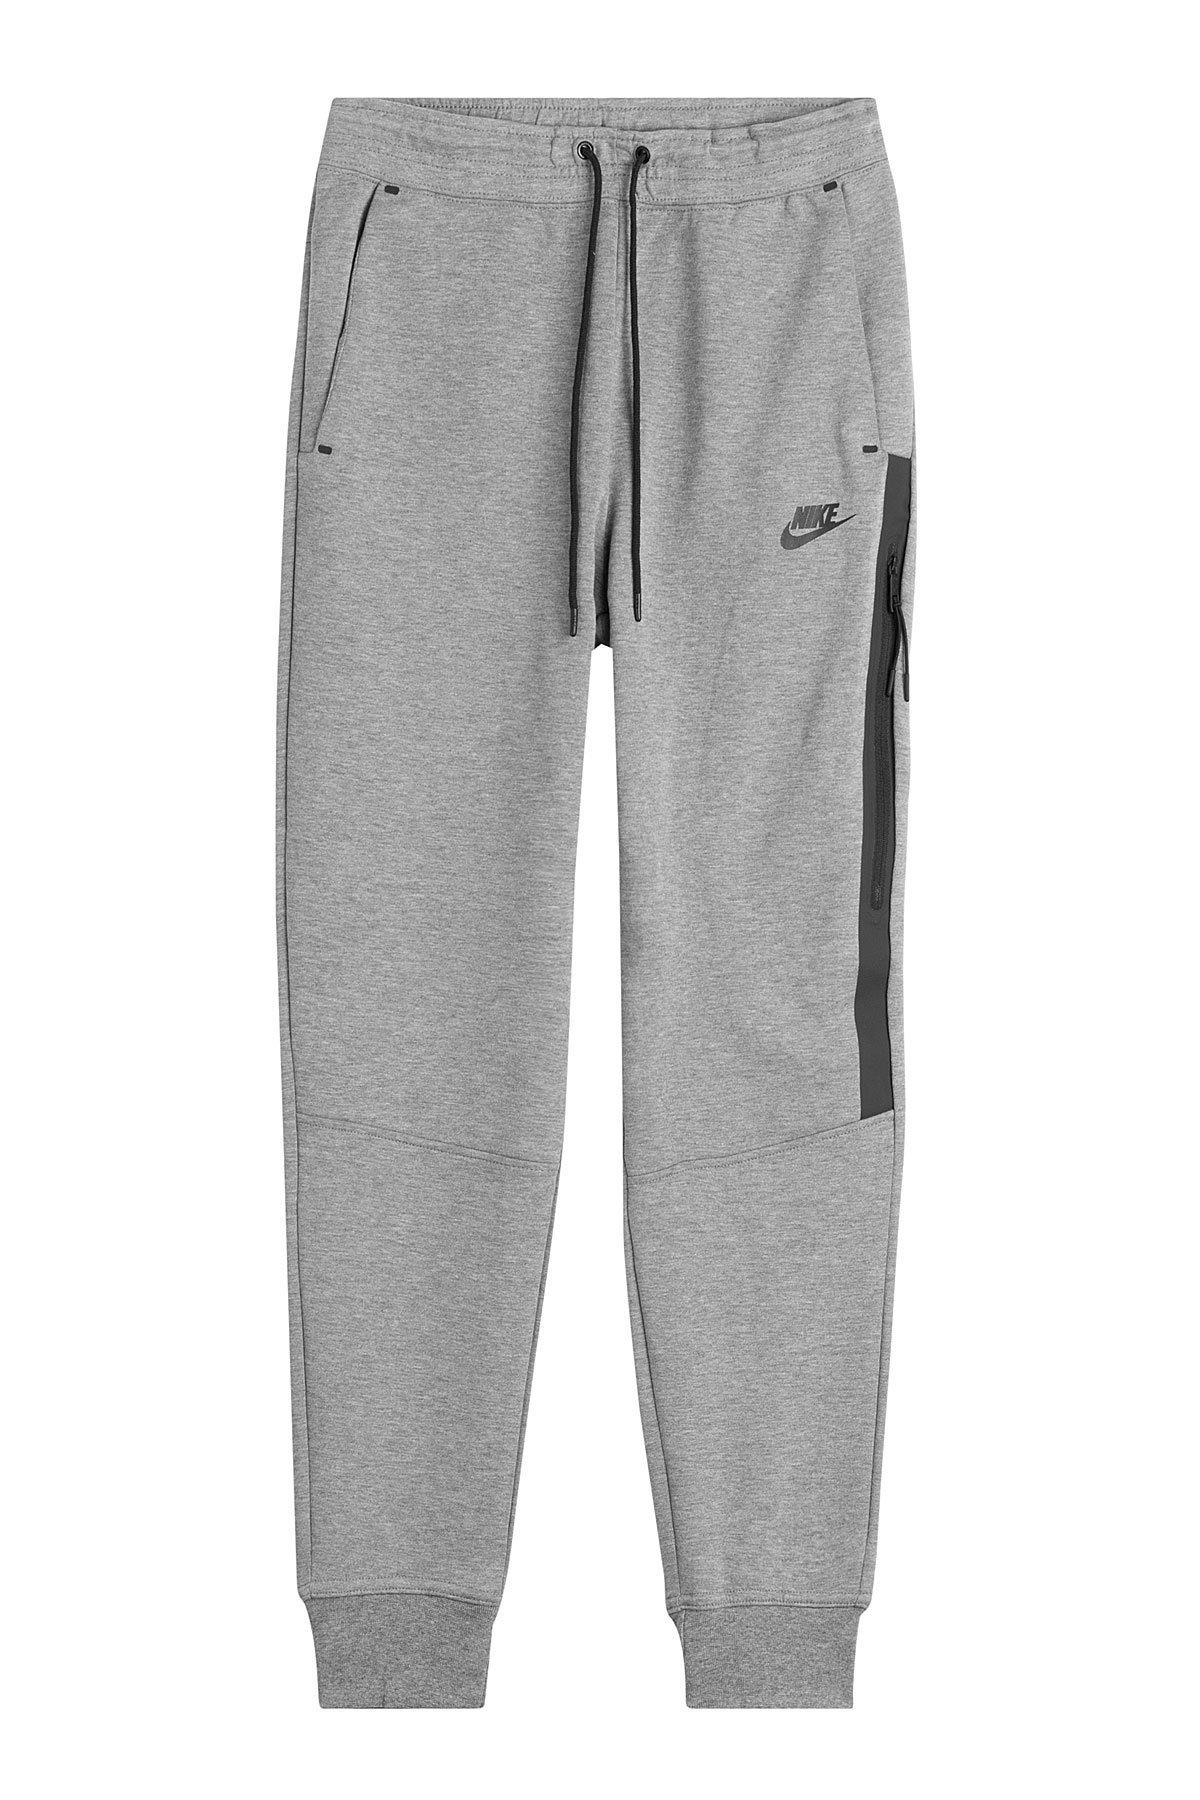 Lyst - Nike Cotton Blend Sweatpants in Gray